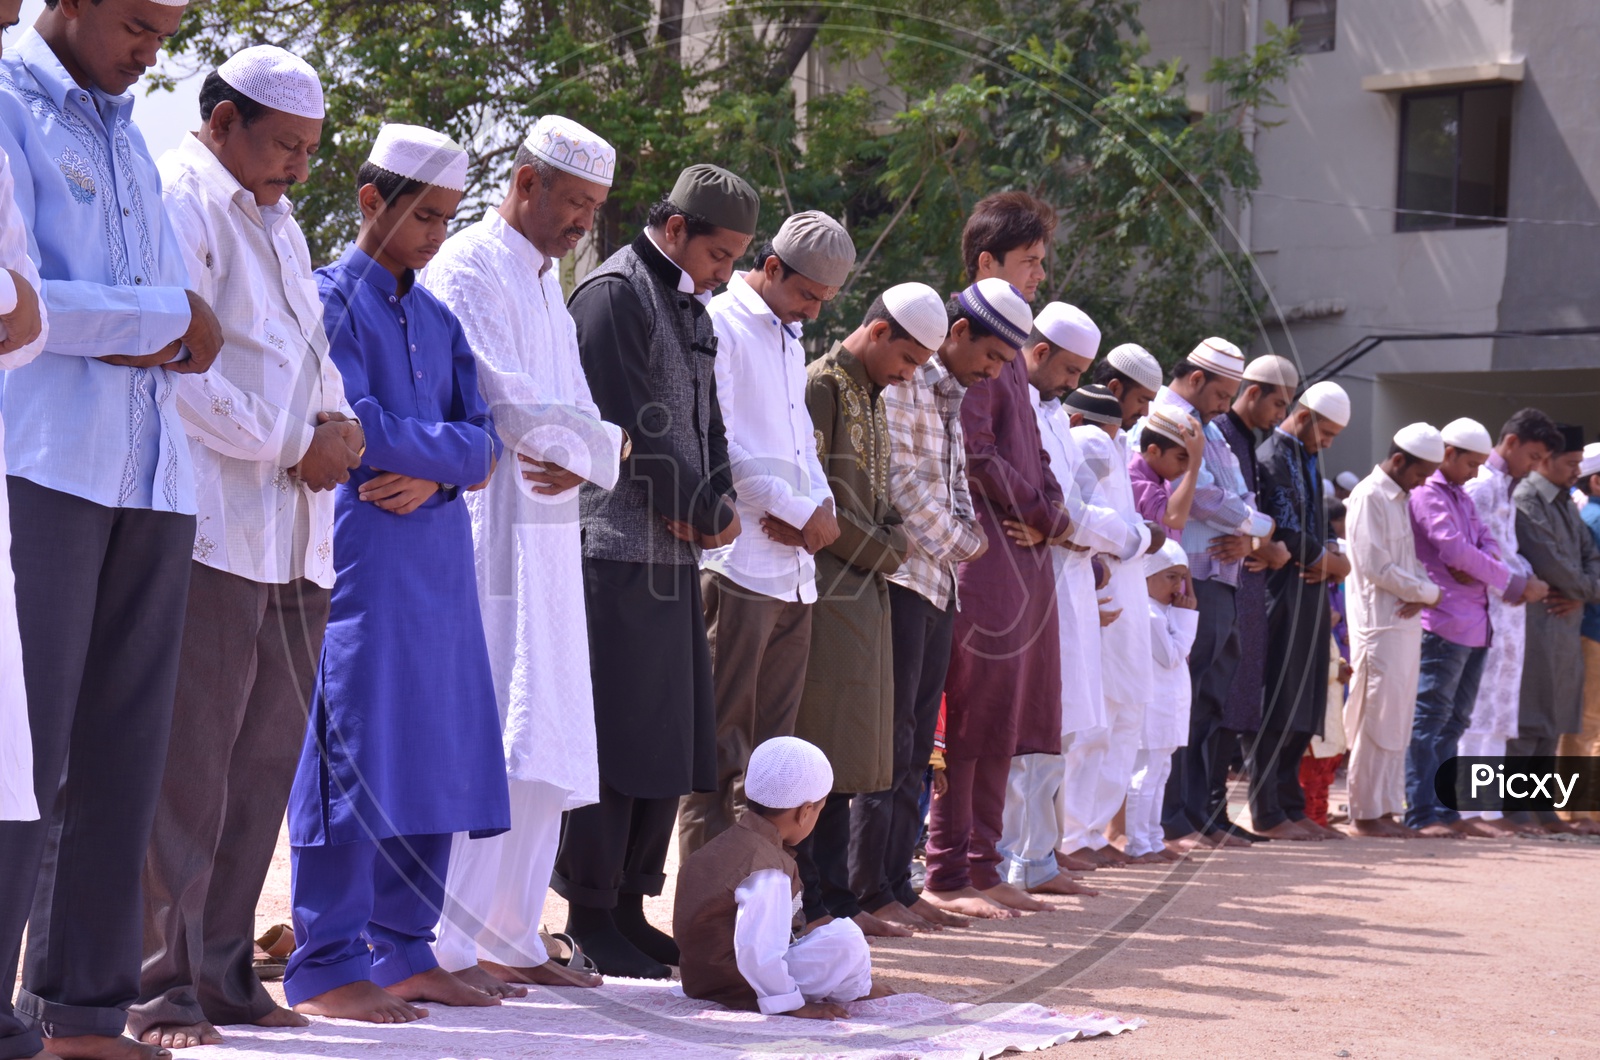 Prayers during Ramadam